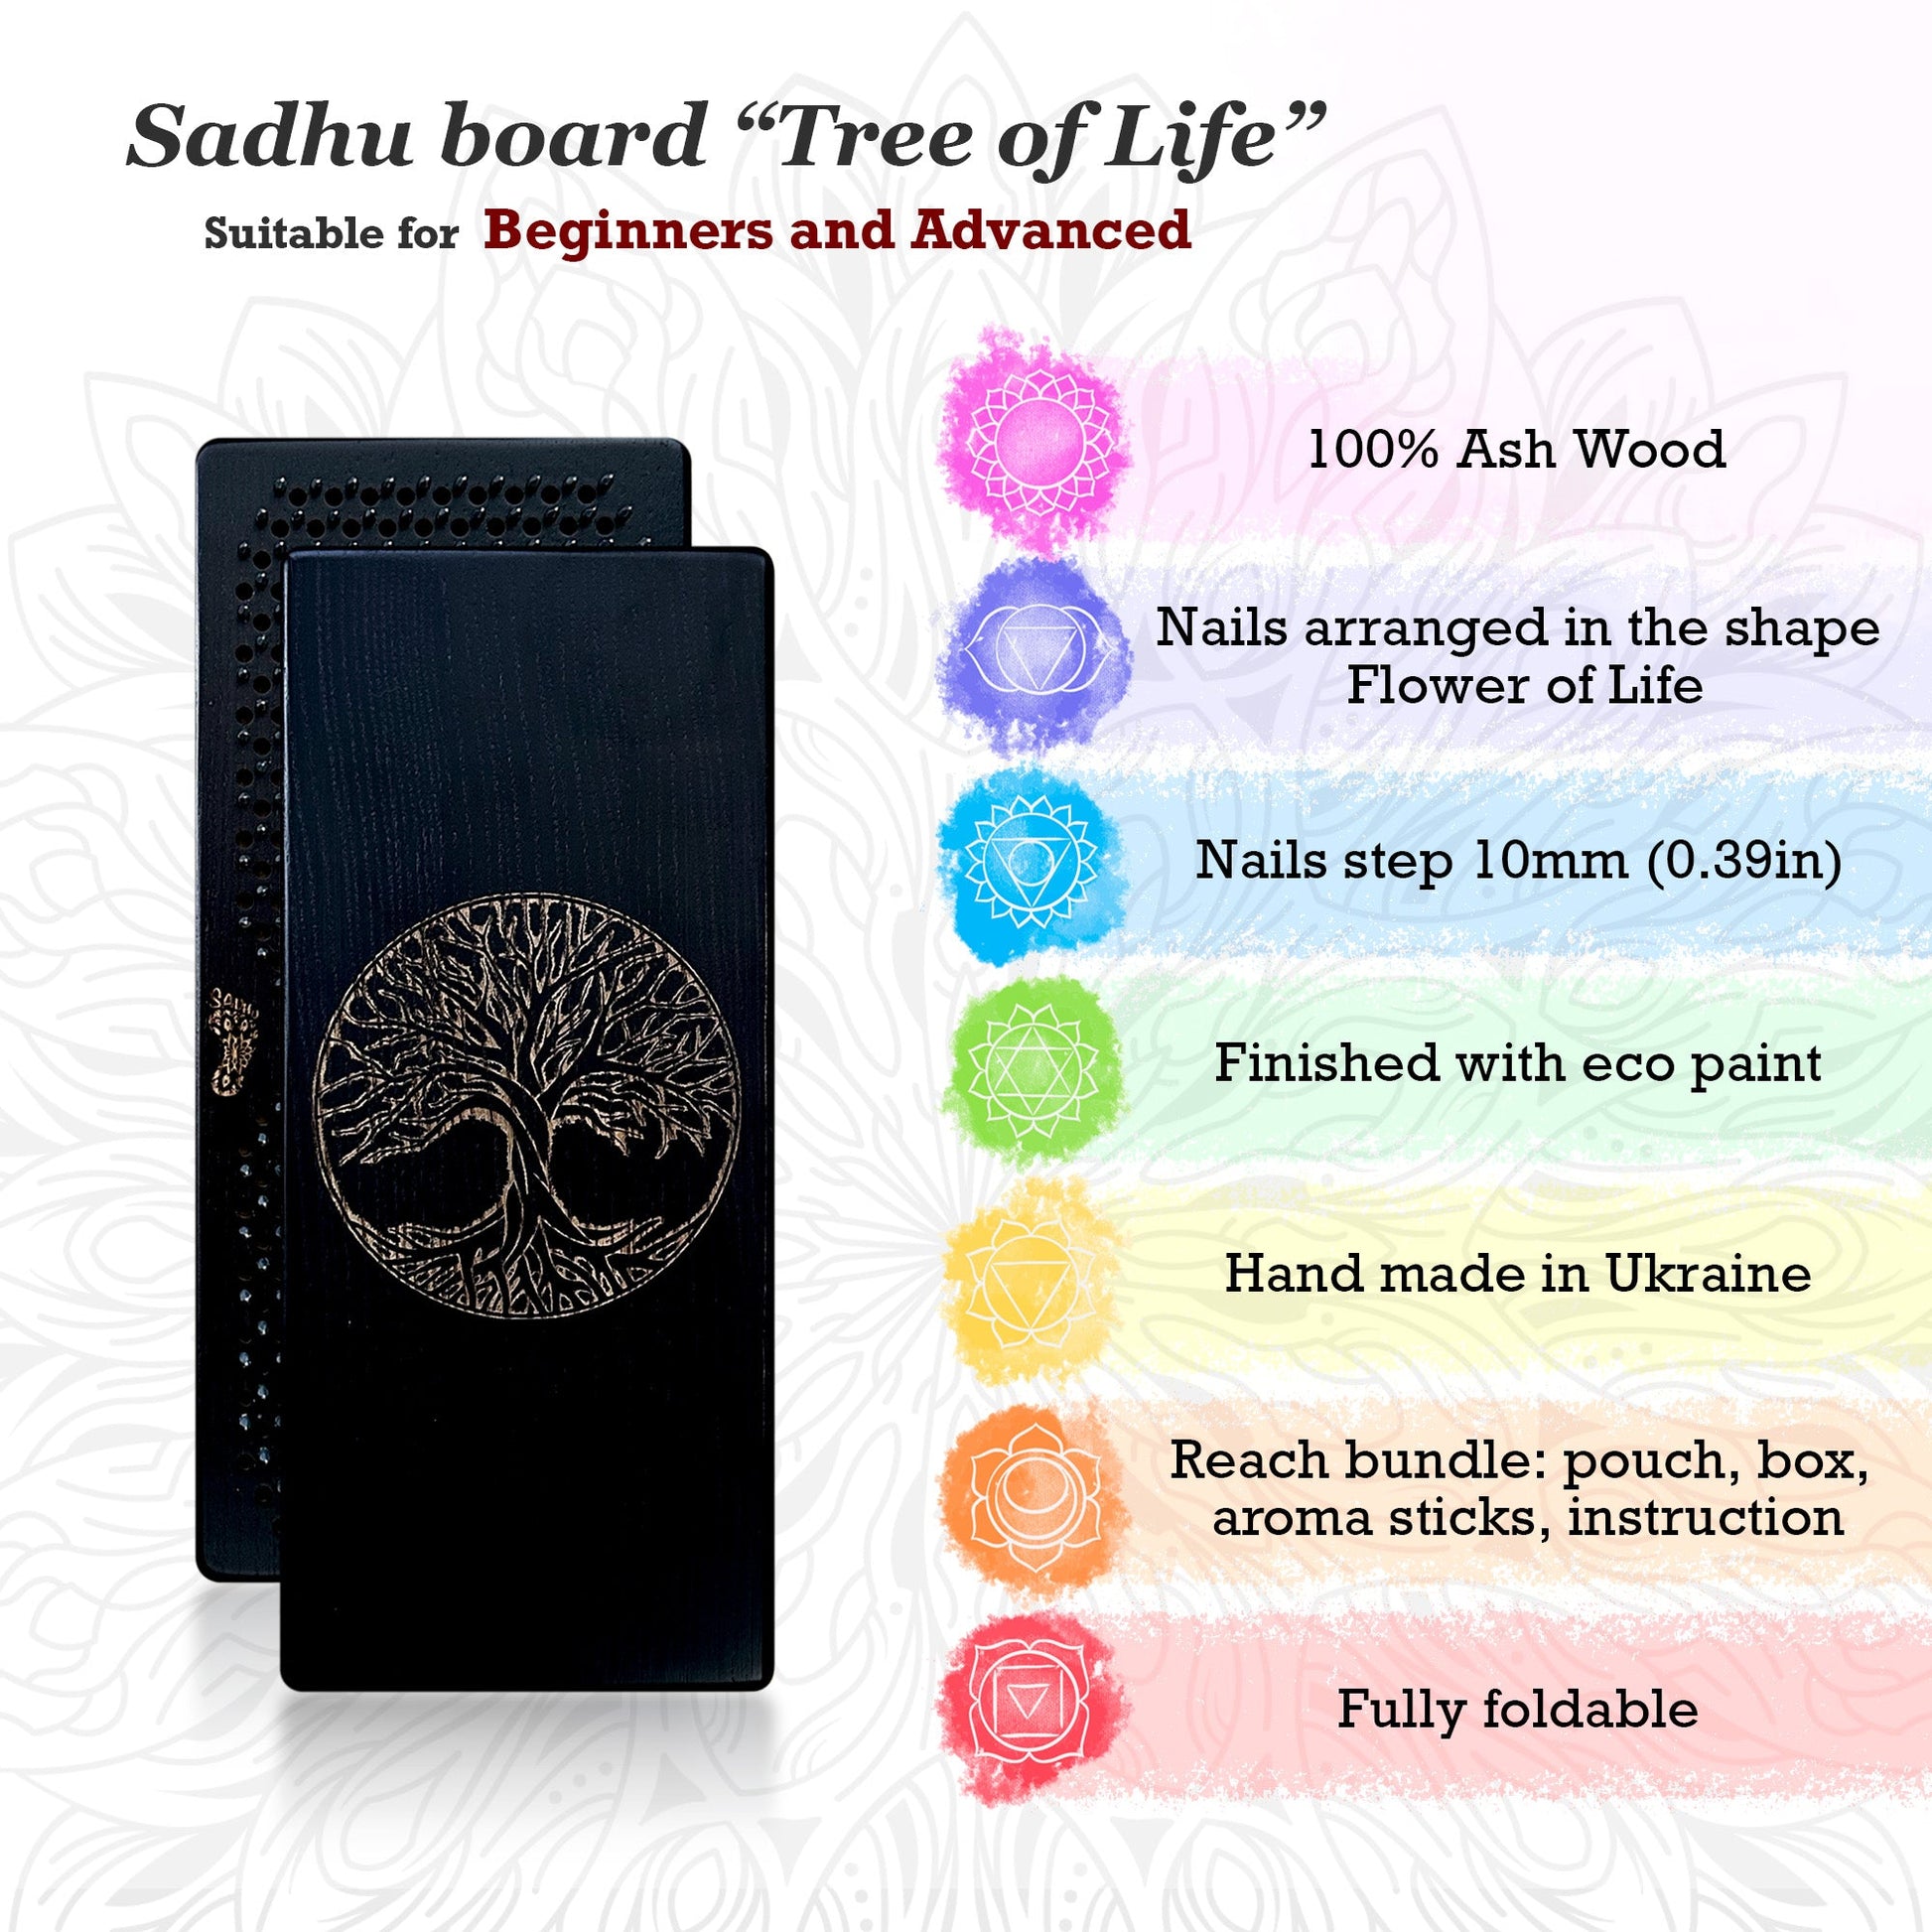 benefits of Oh! Sadhu board Tree of Life, chakras